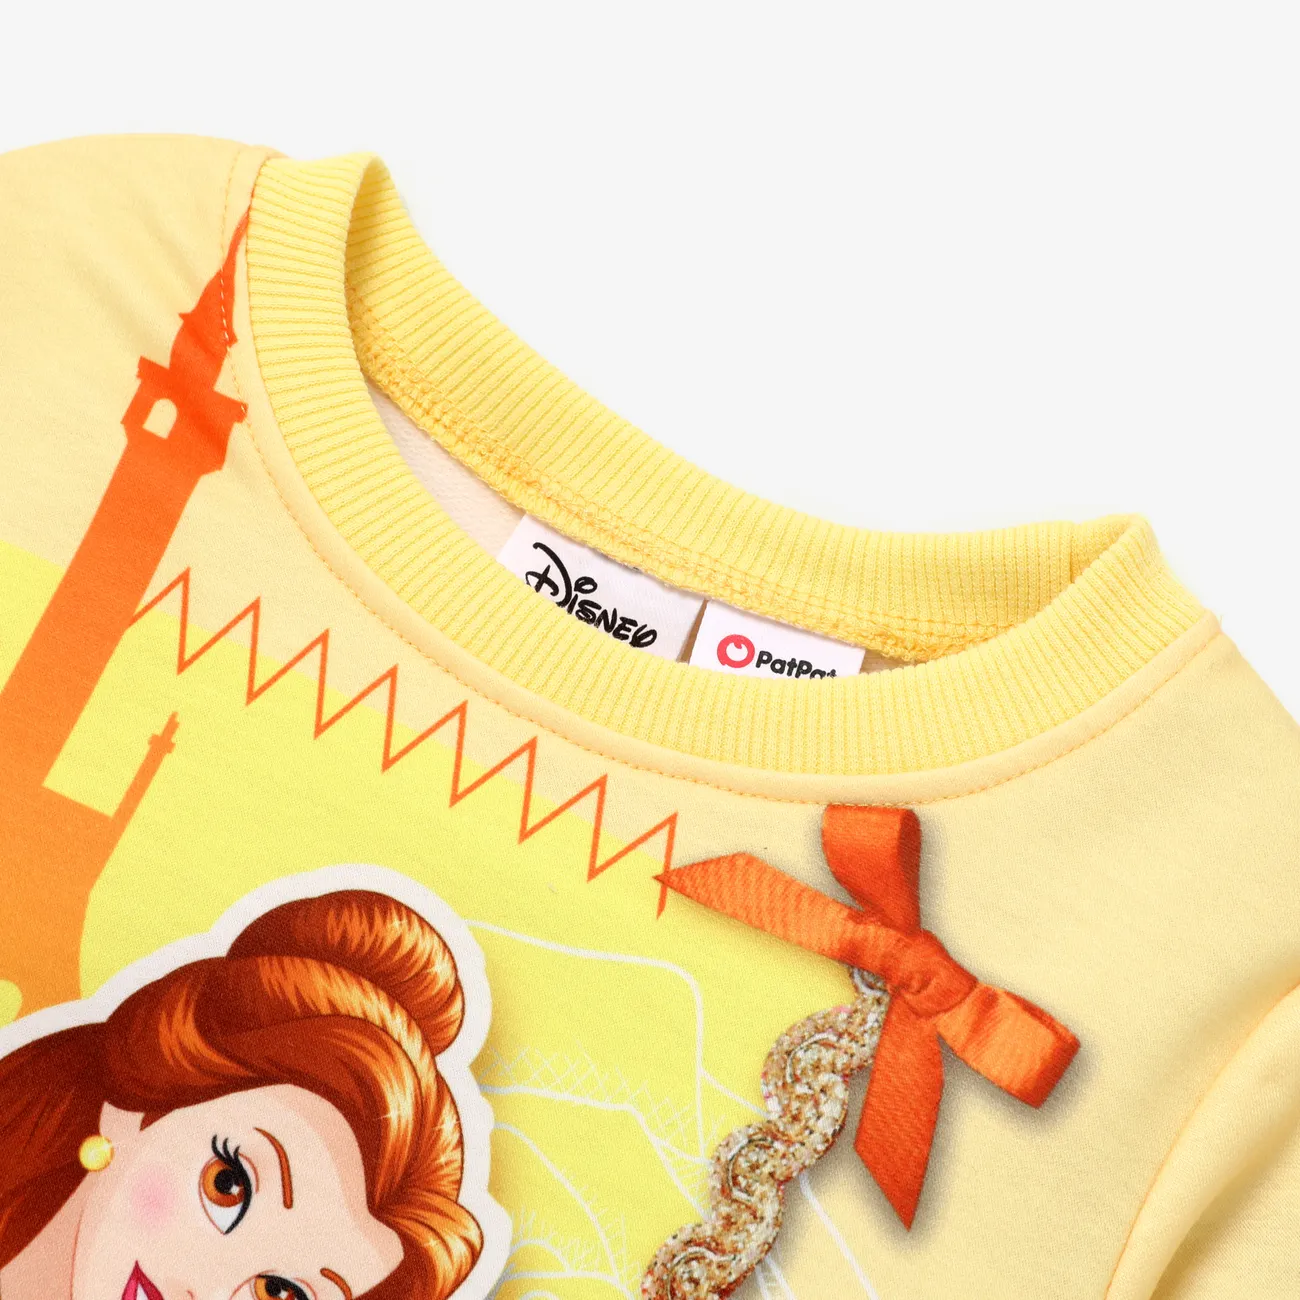 Disney Princess Criança Menina Infantil Sweatshirt Amarelo big image 1